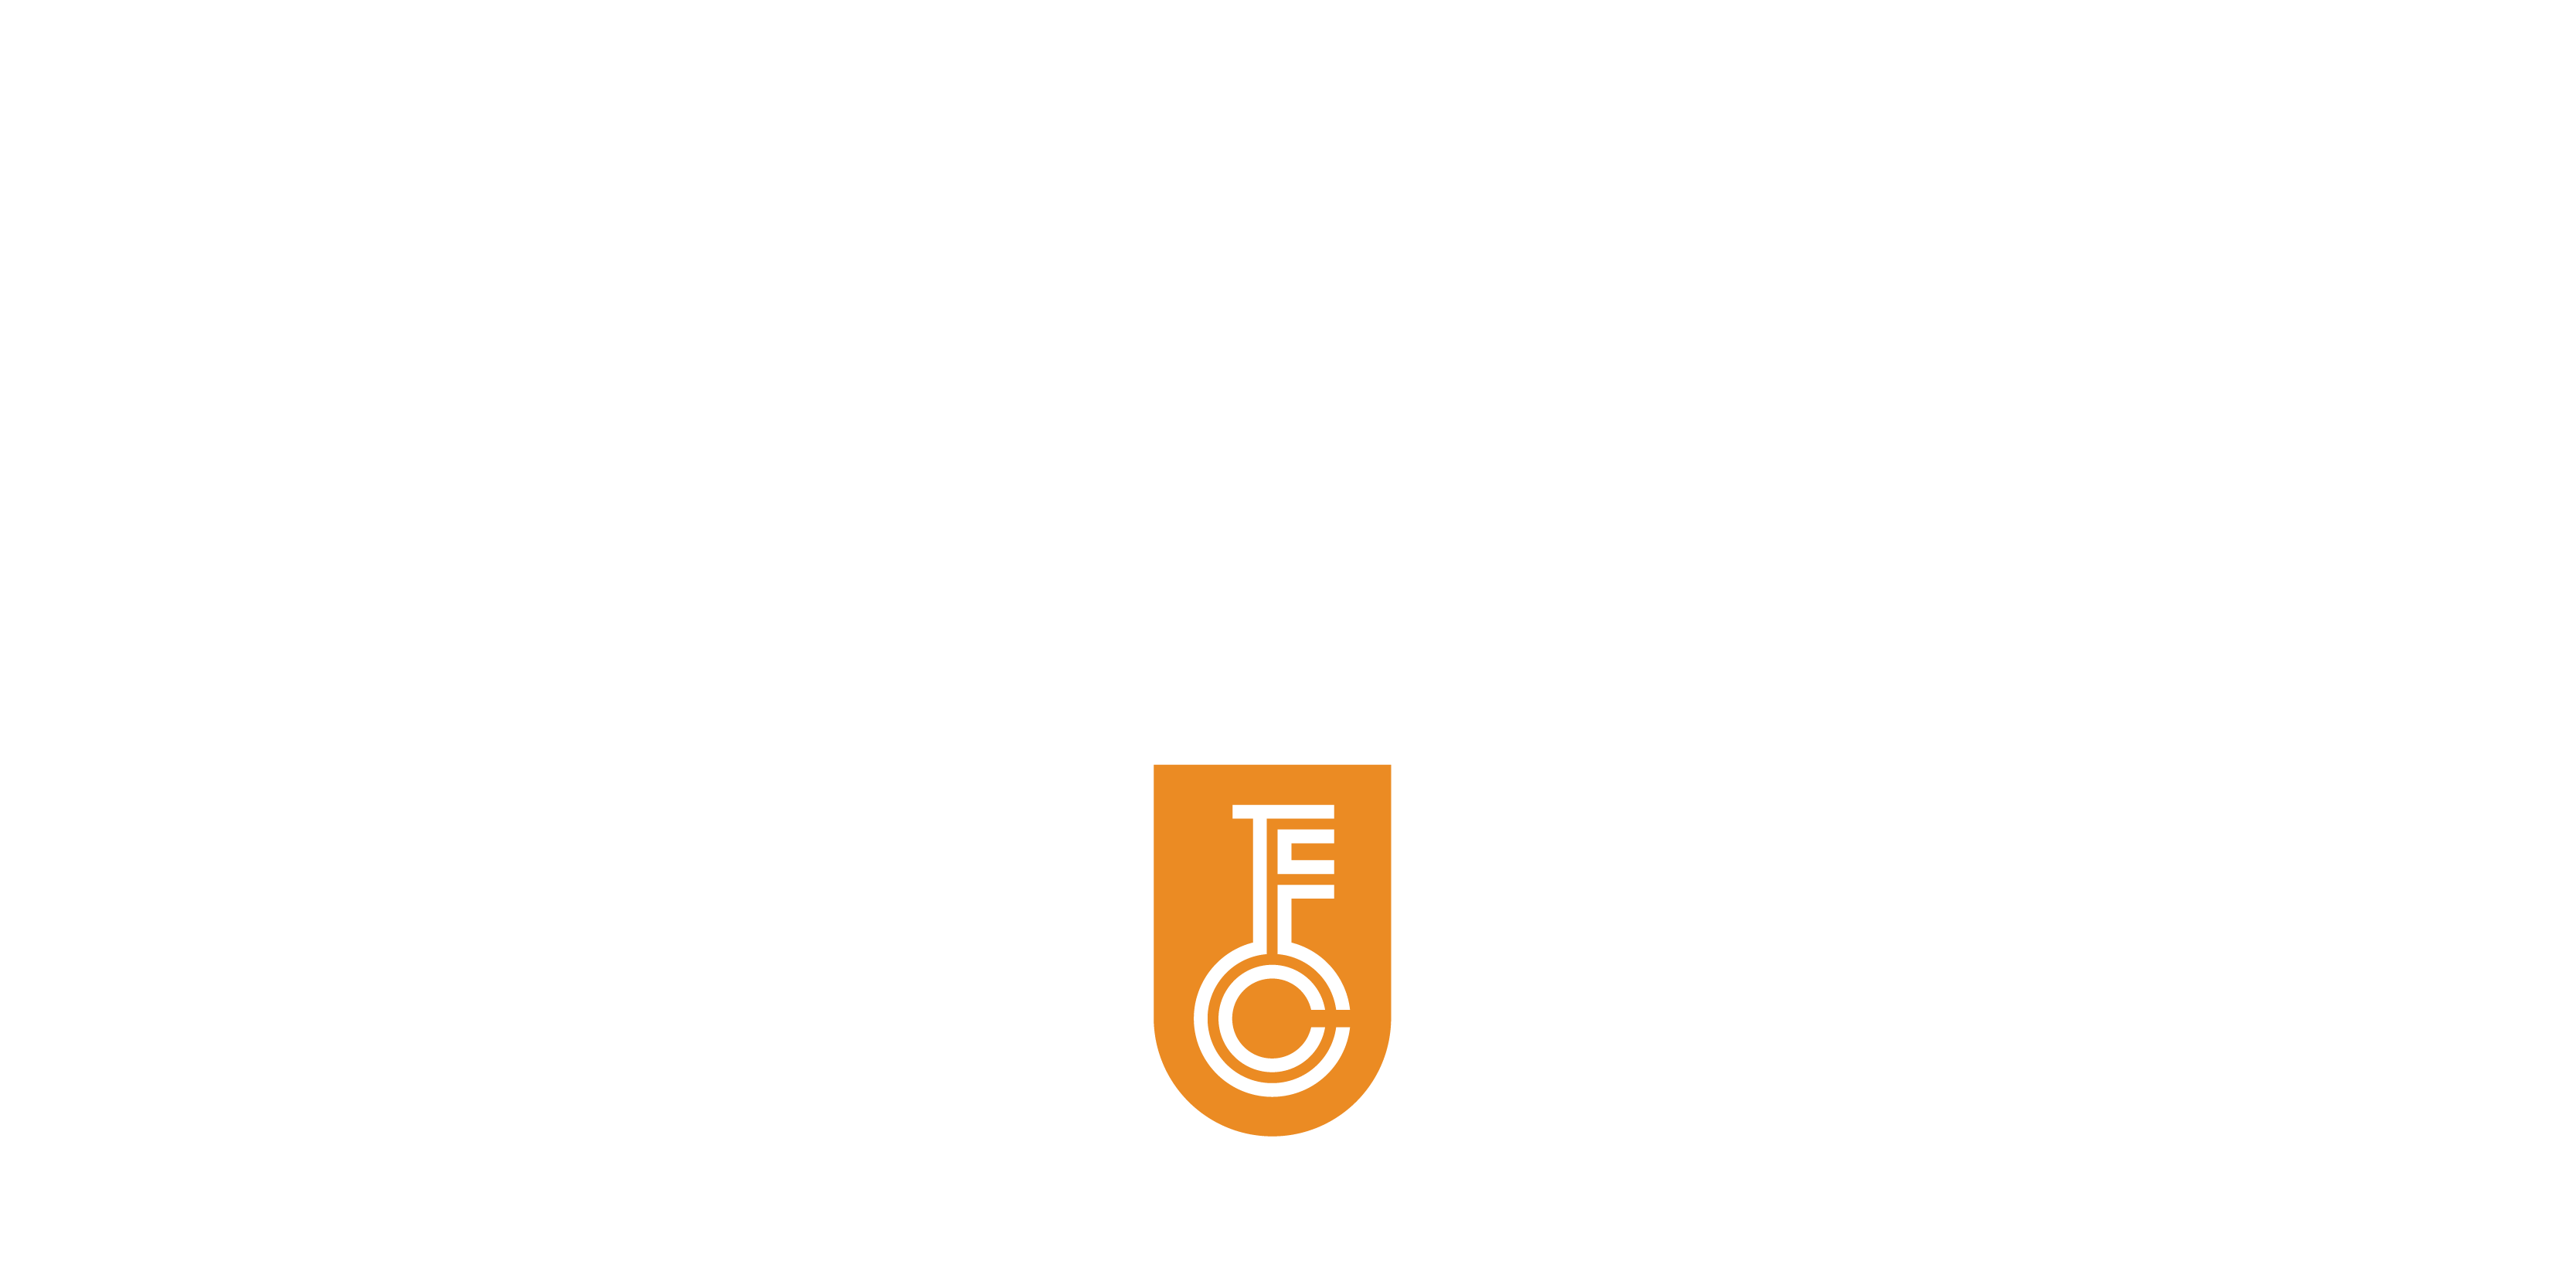 FlatIrons College